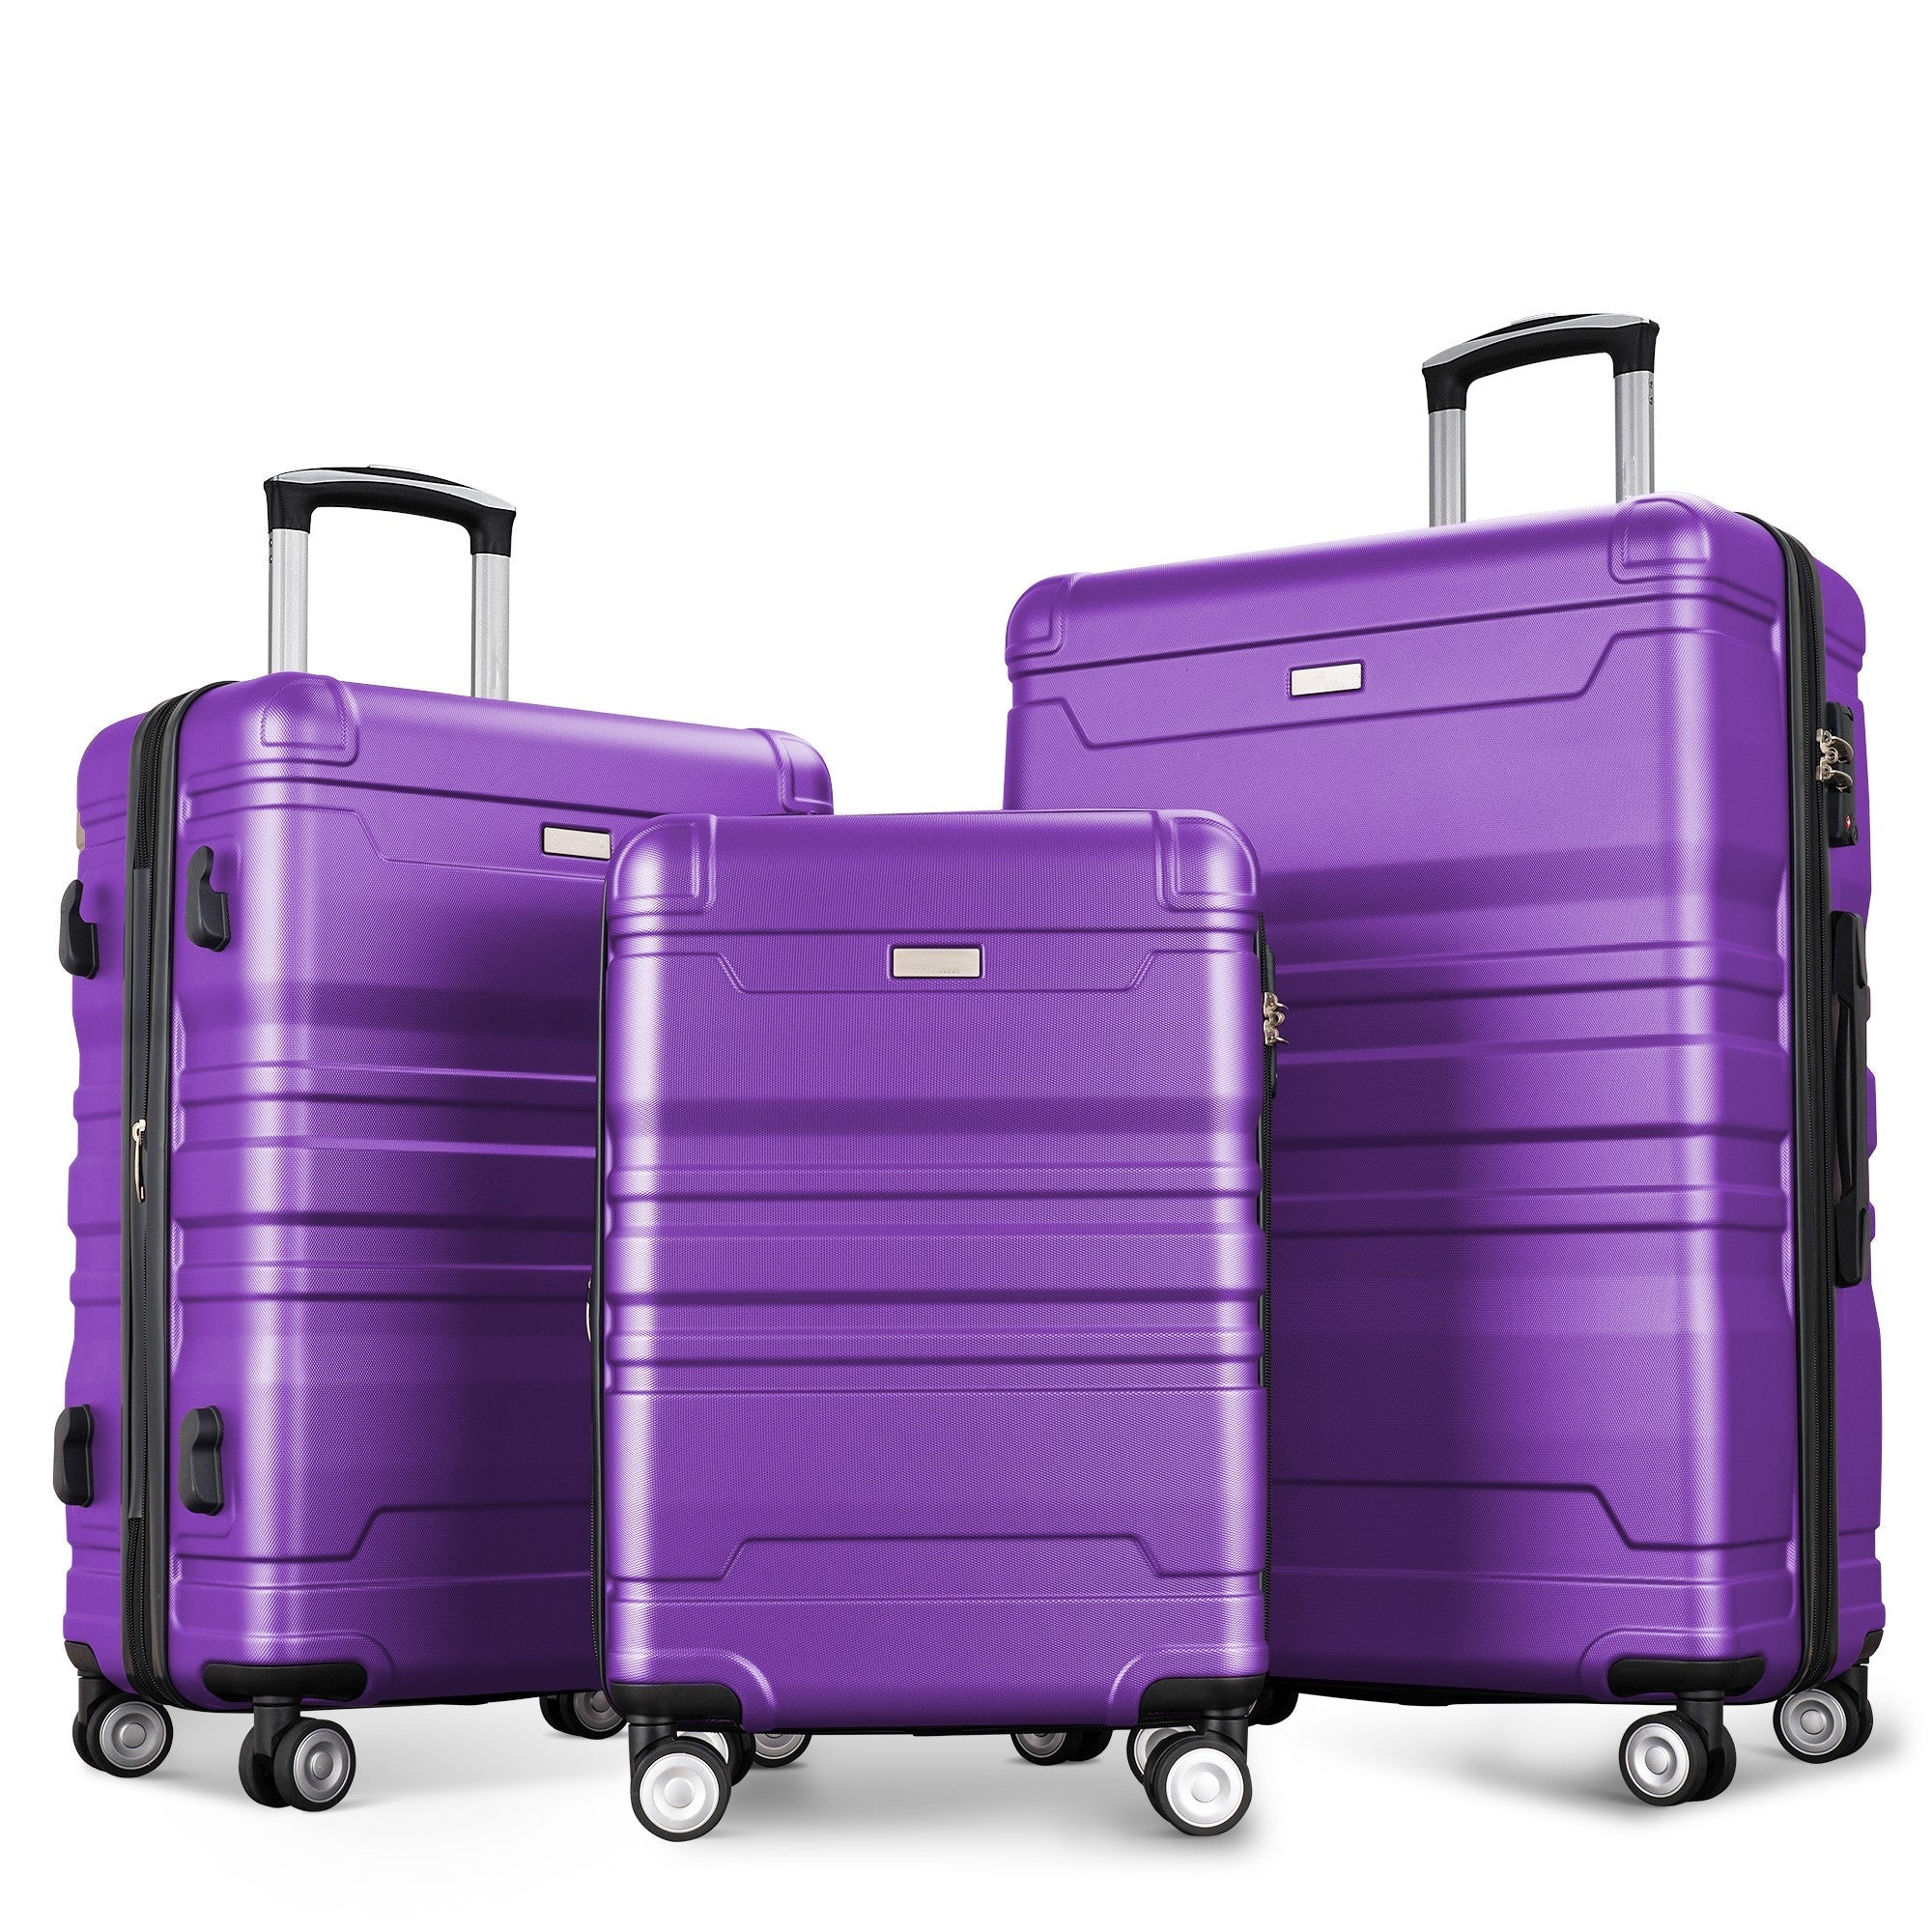 Luggage Sets New Model Expandable ABS Hardshell 3pcs Clearance Luggage (purple)